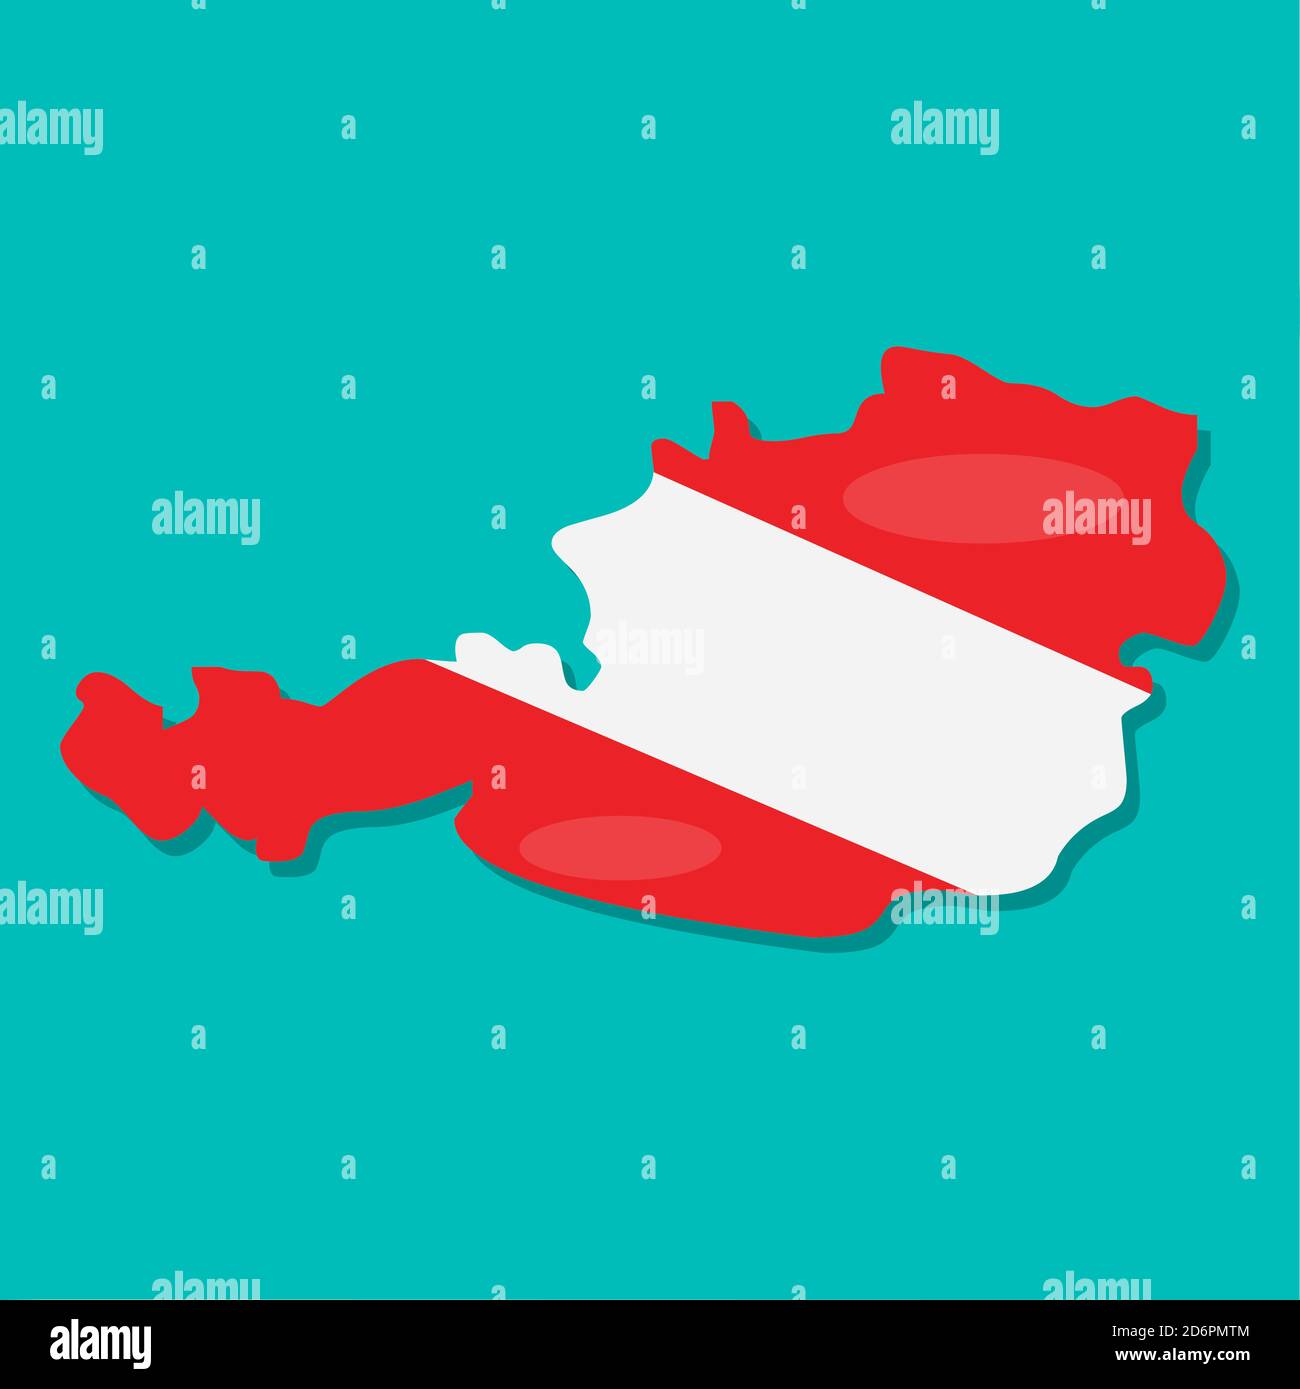 austria map with austria national flag inside vector illustration Stock Vector